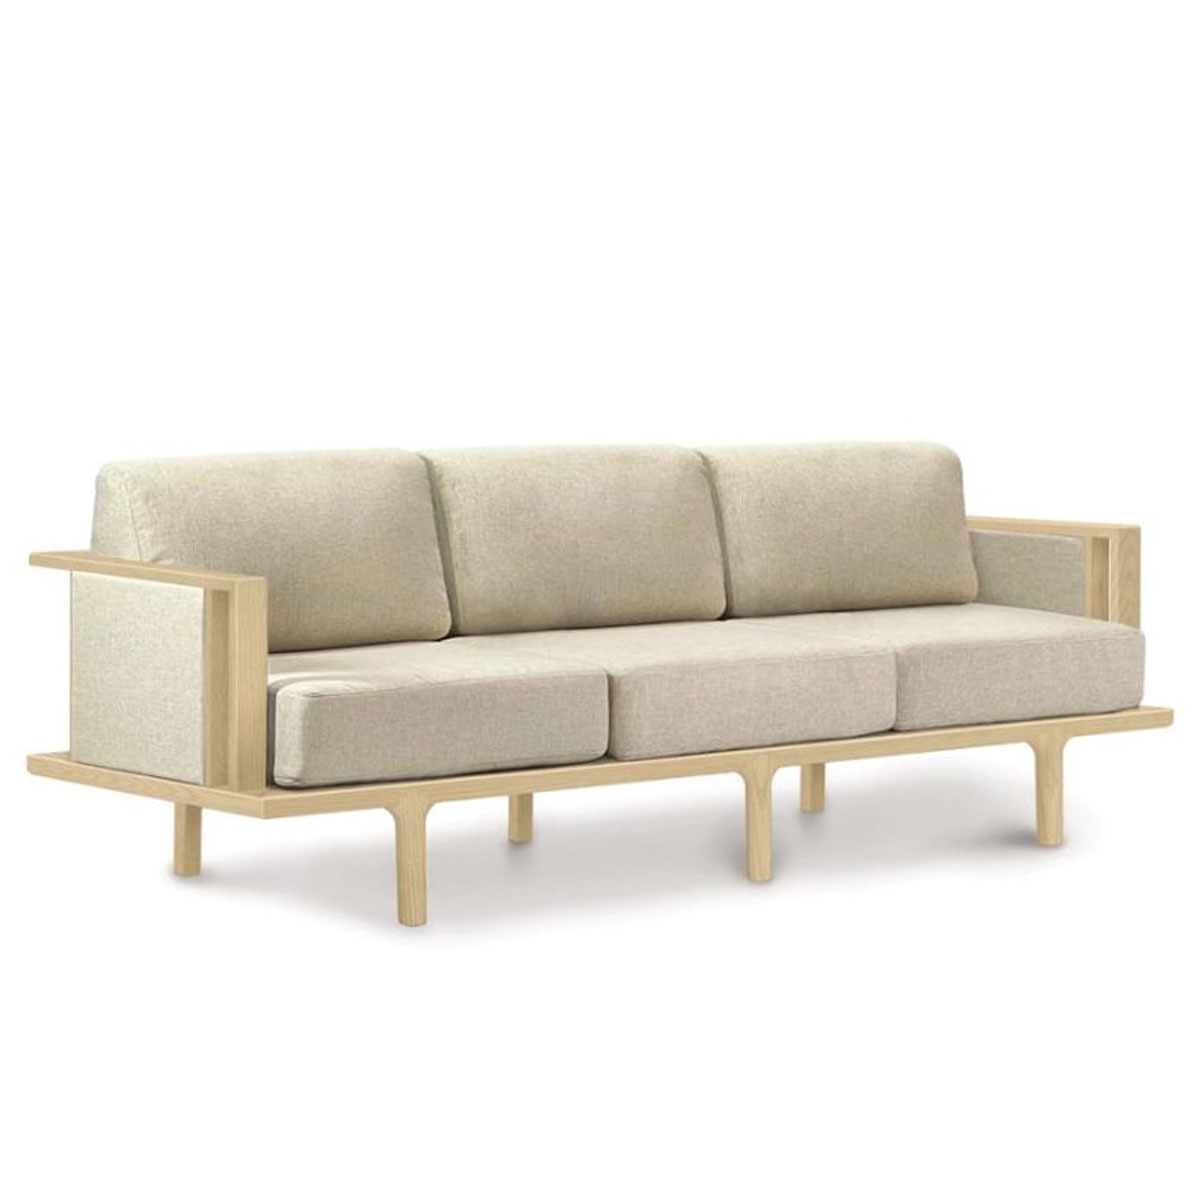 Copeland Sierra Sofa with Upholstered Panels in Oak